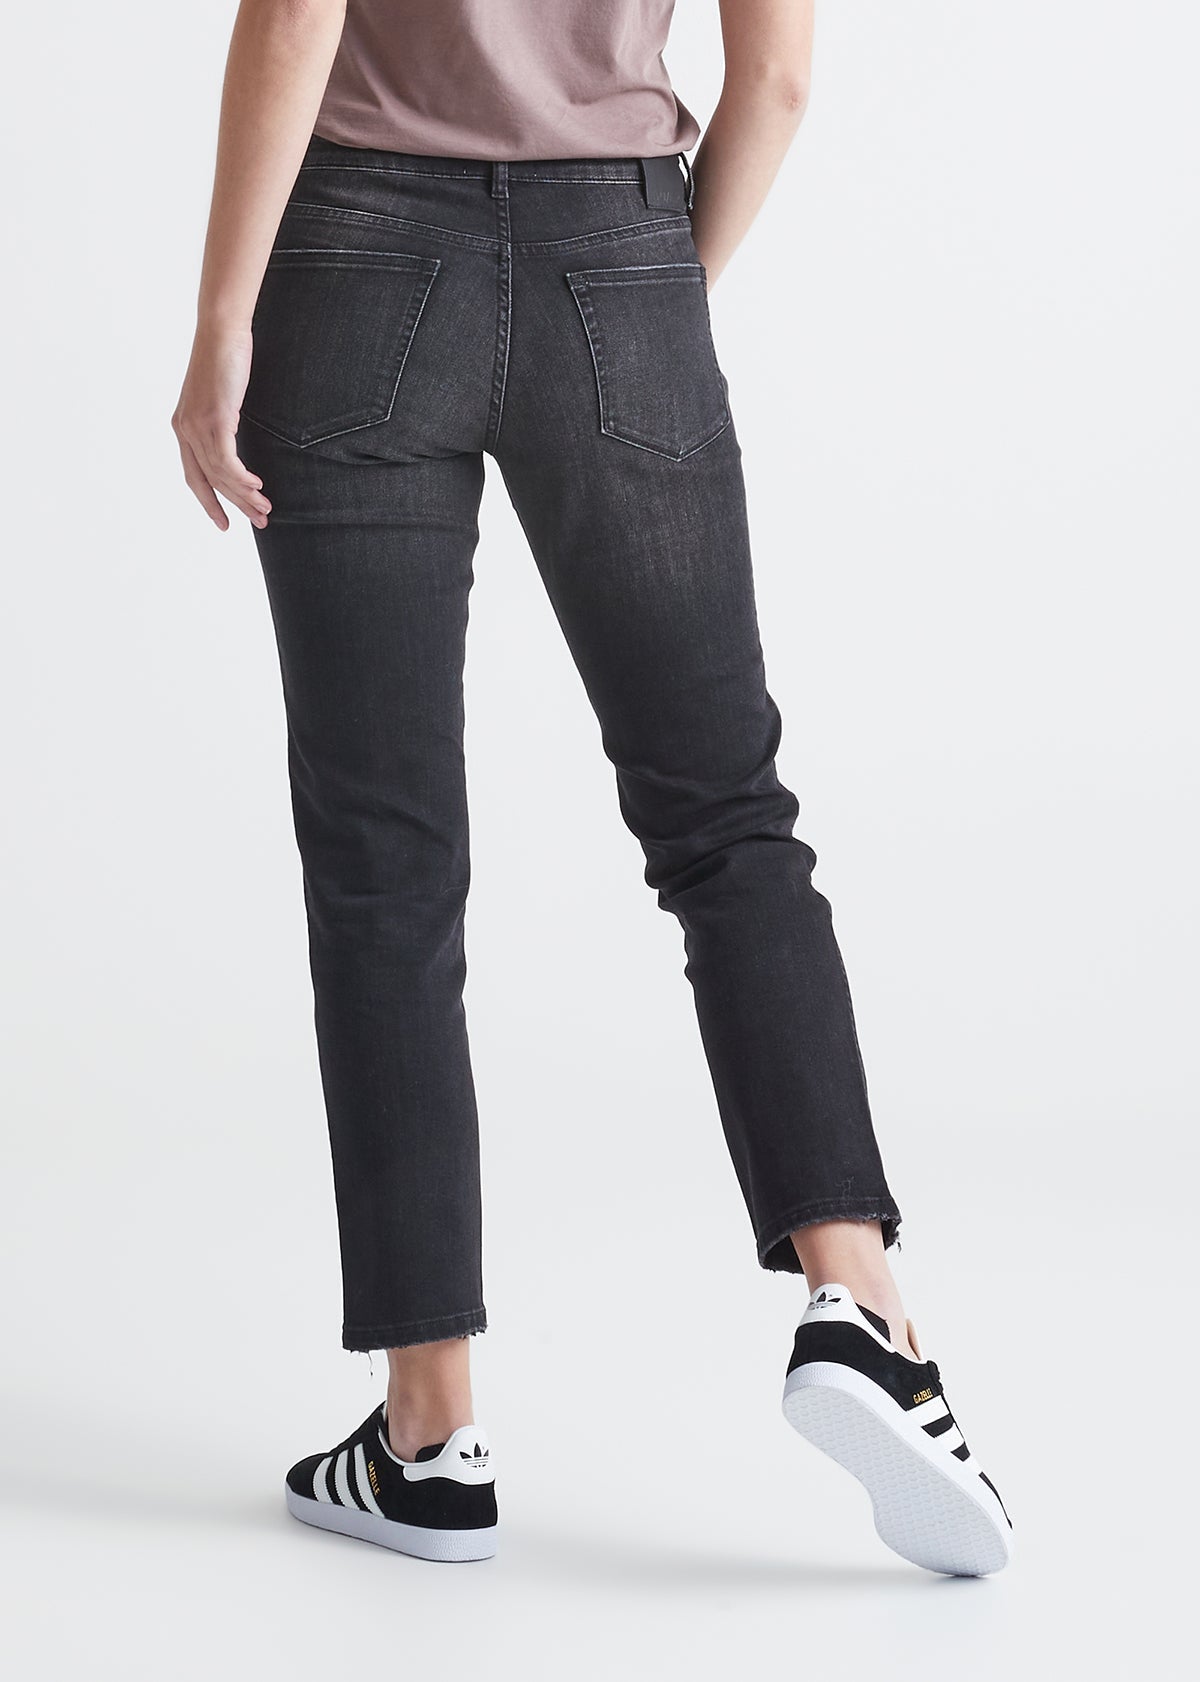 Weekday Ace high waist wide leg jeans in vintage black